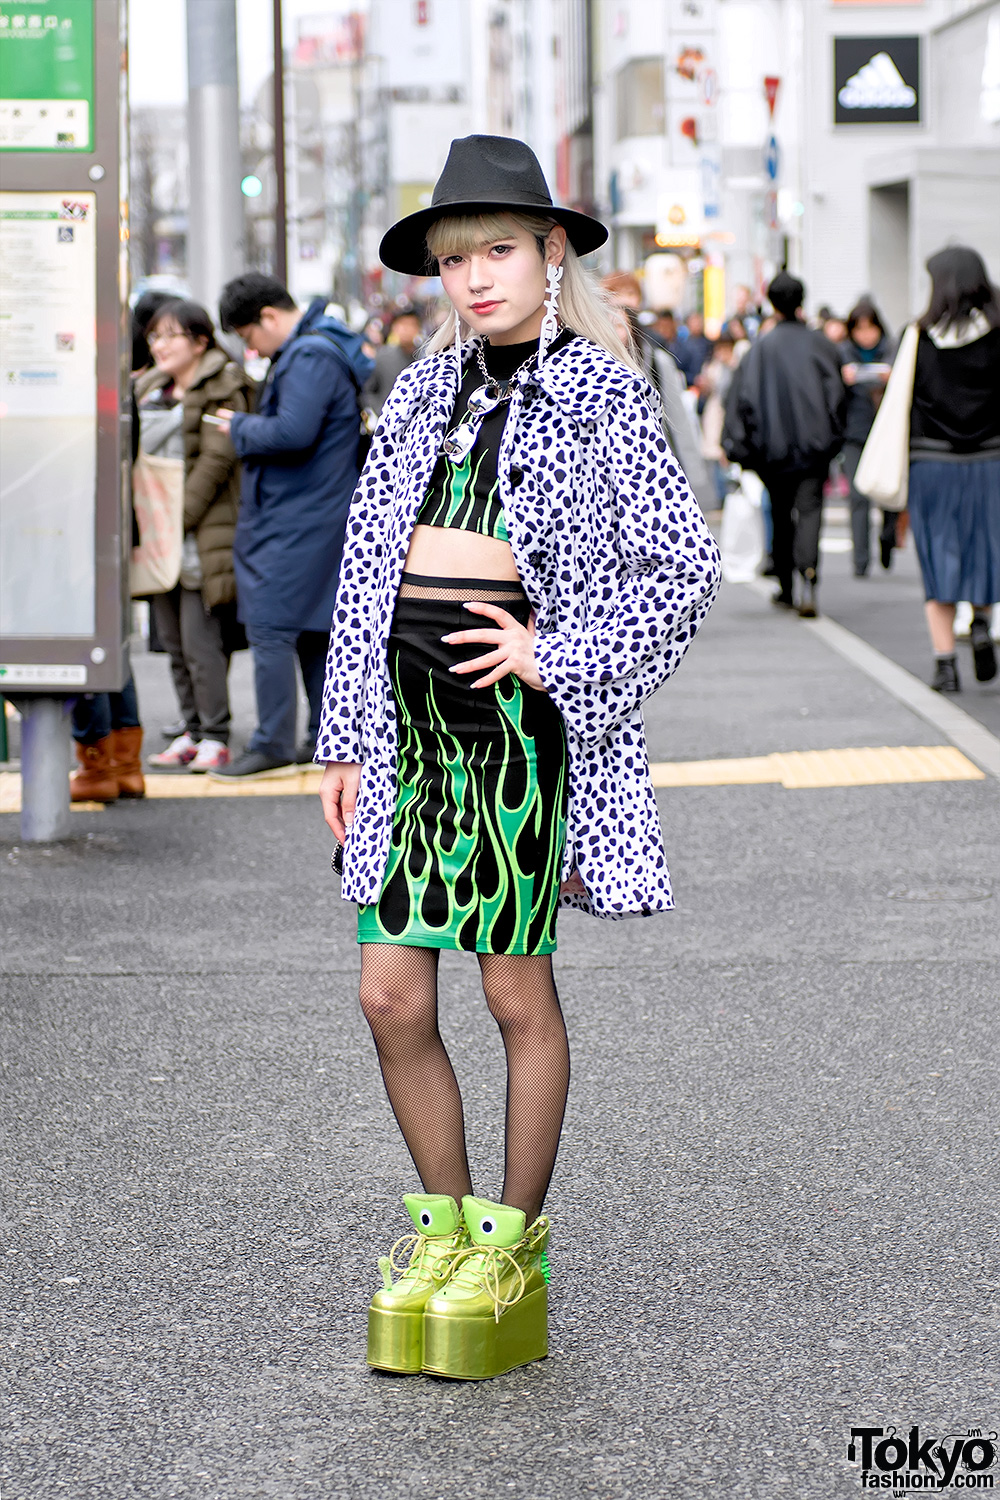 Образ глупый. Токио стрит фэшн. Стрит стайл Токио мода. Модники на улицах Токио. Модницы на улицах.